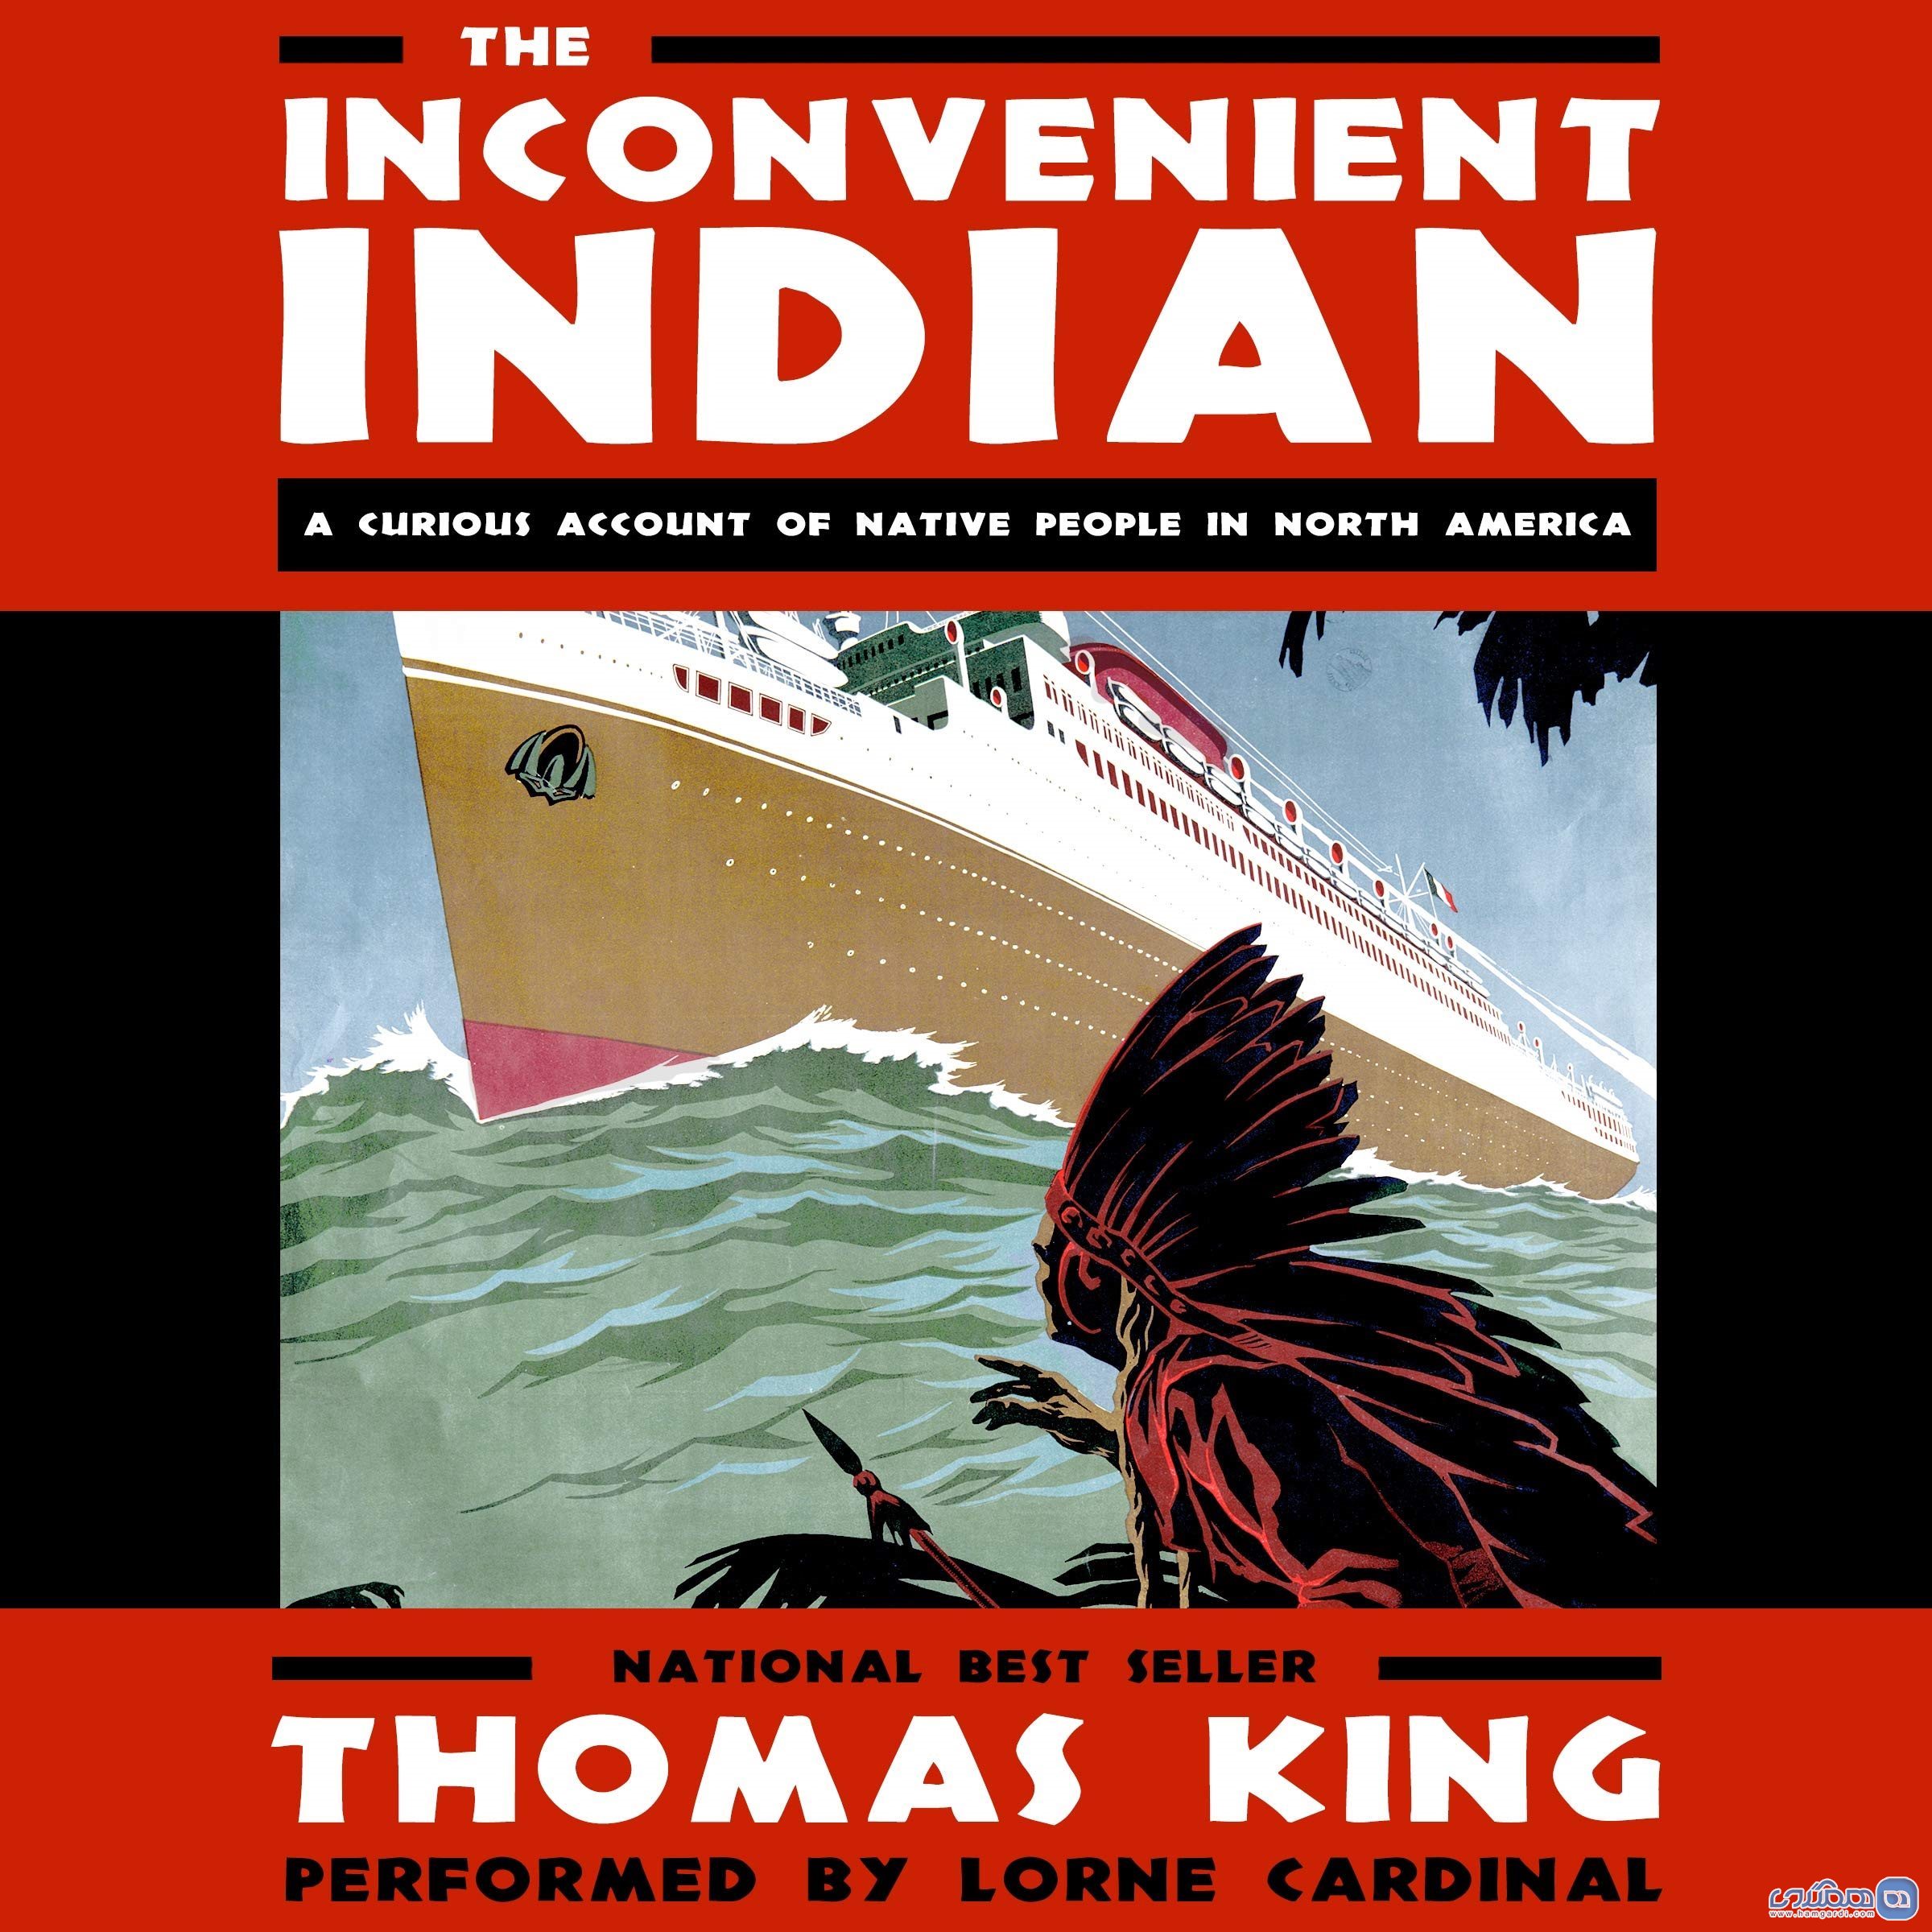 سرخ پوست دردسر آور: داستان عجیب مردم بومی آمریکای شمالی The Inconvenient Indian: A Curious Account of Native People in North America